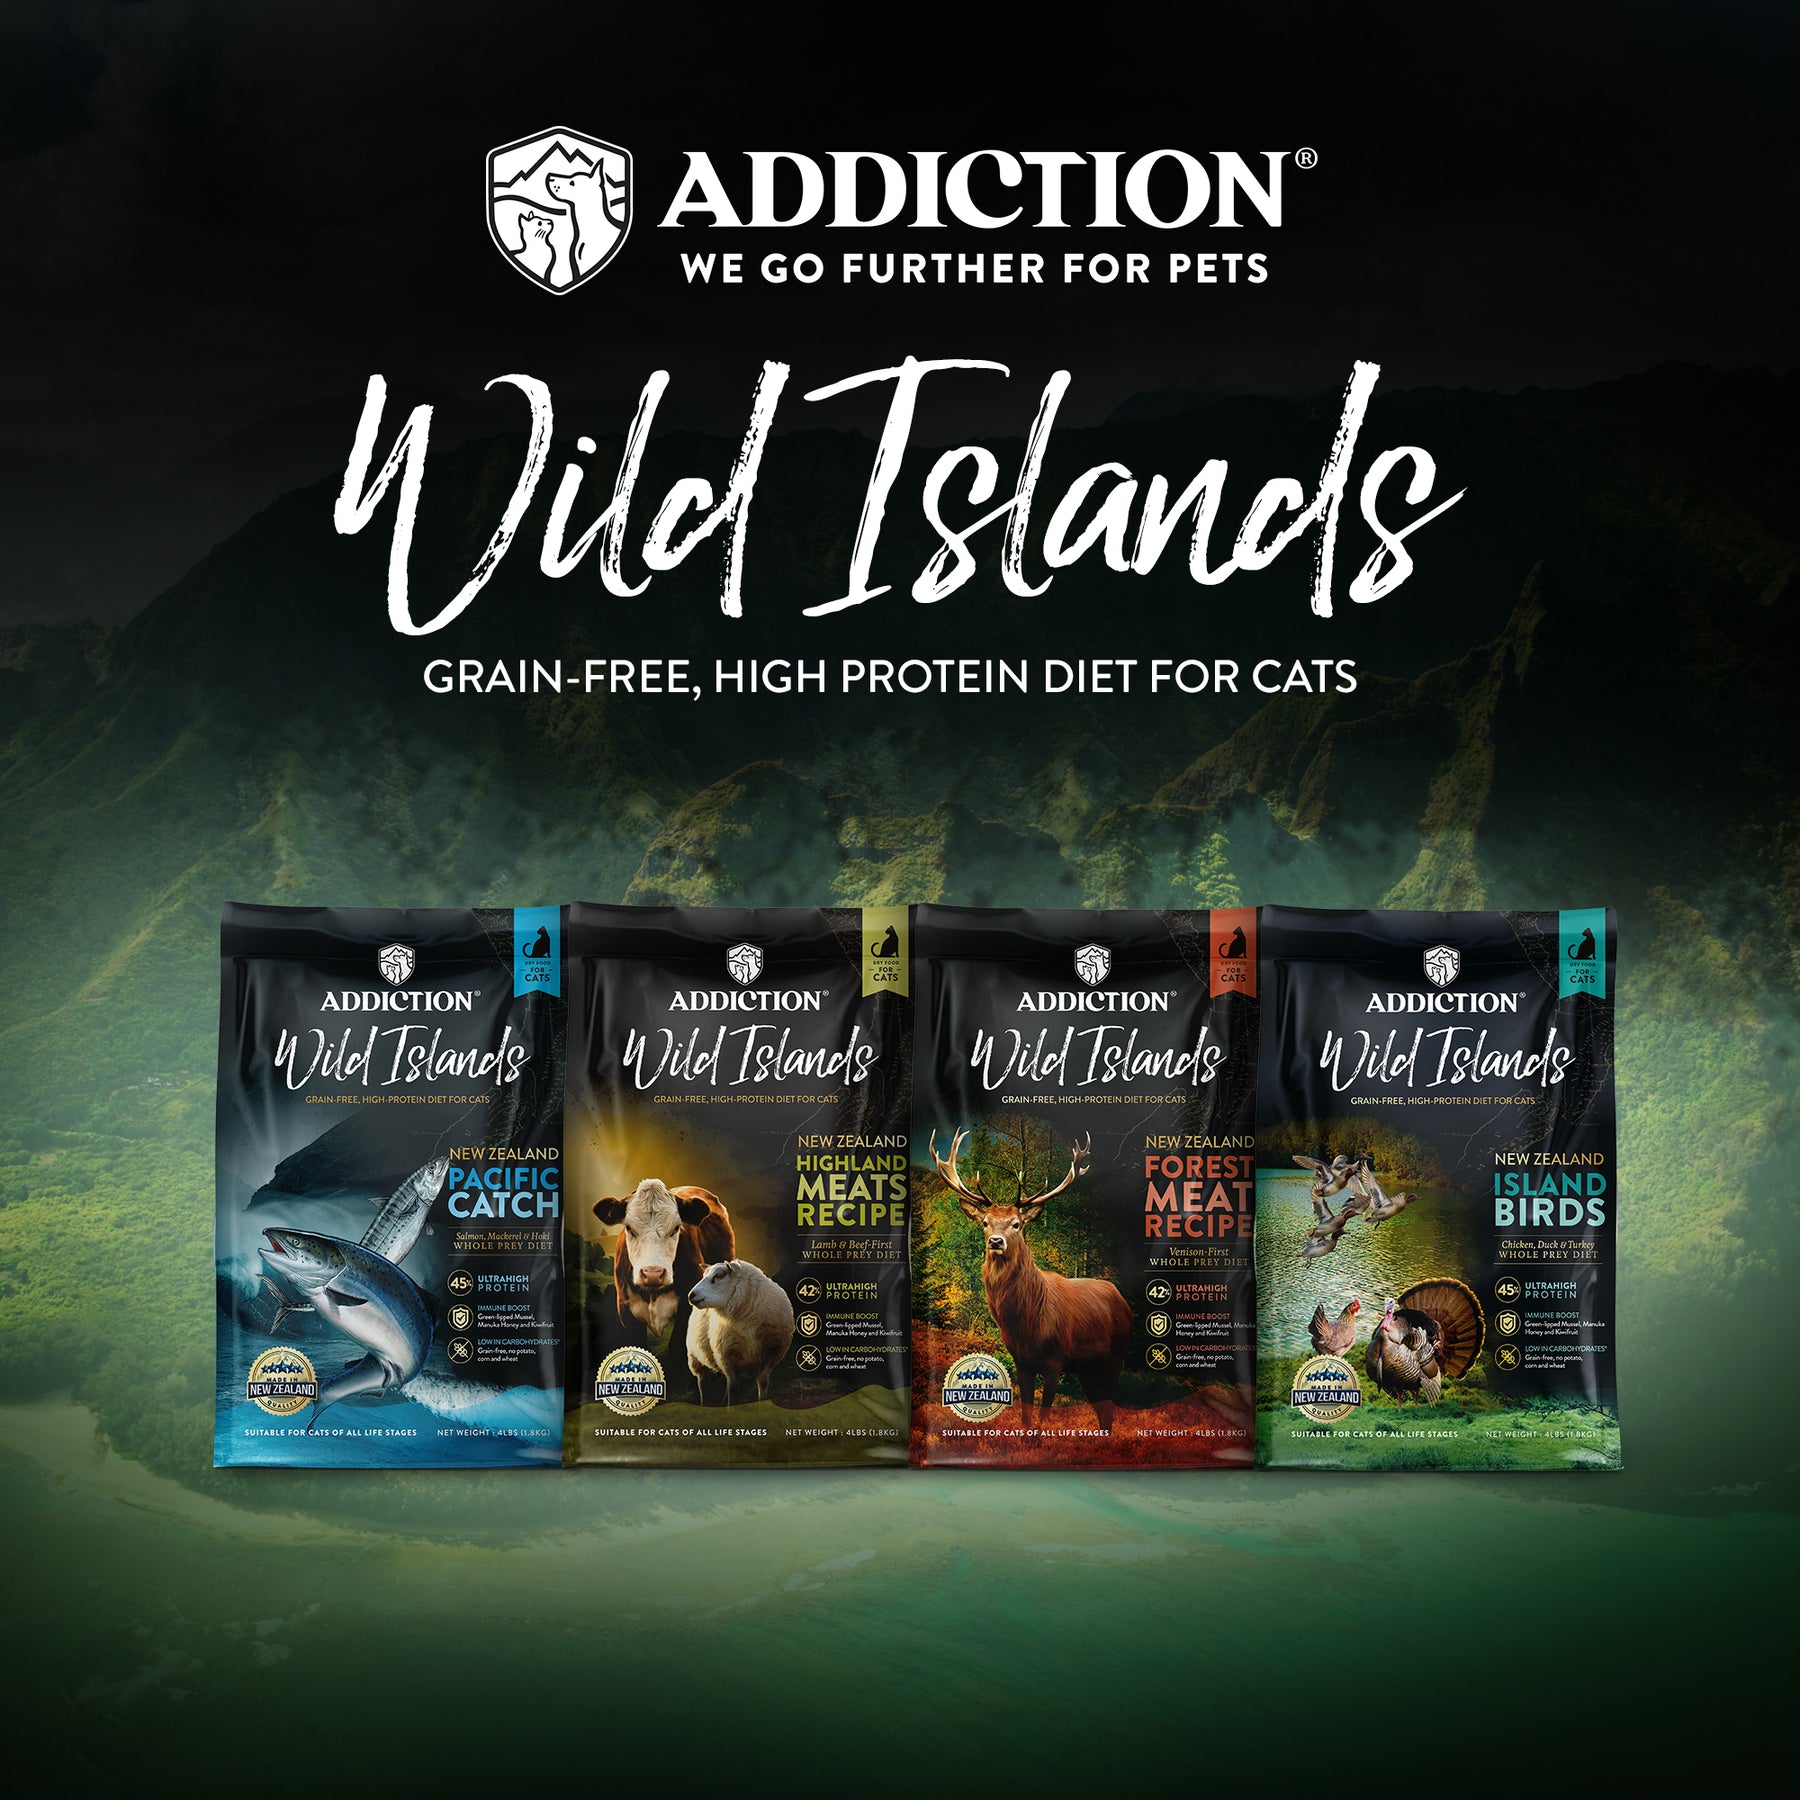 Addiction Wild Islands Cat Highland Meats